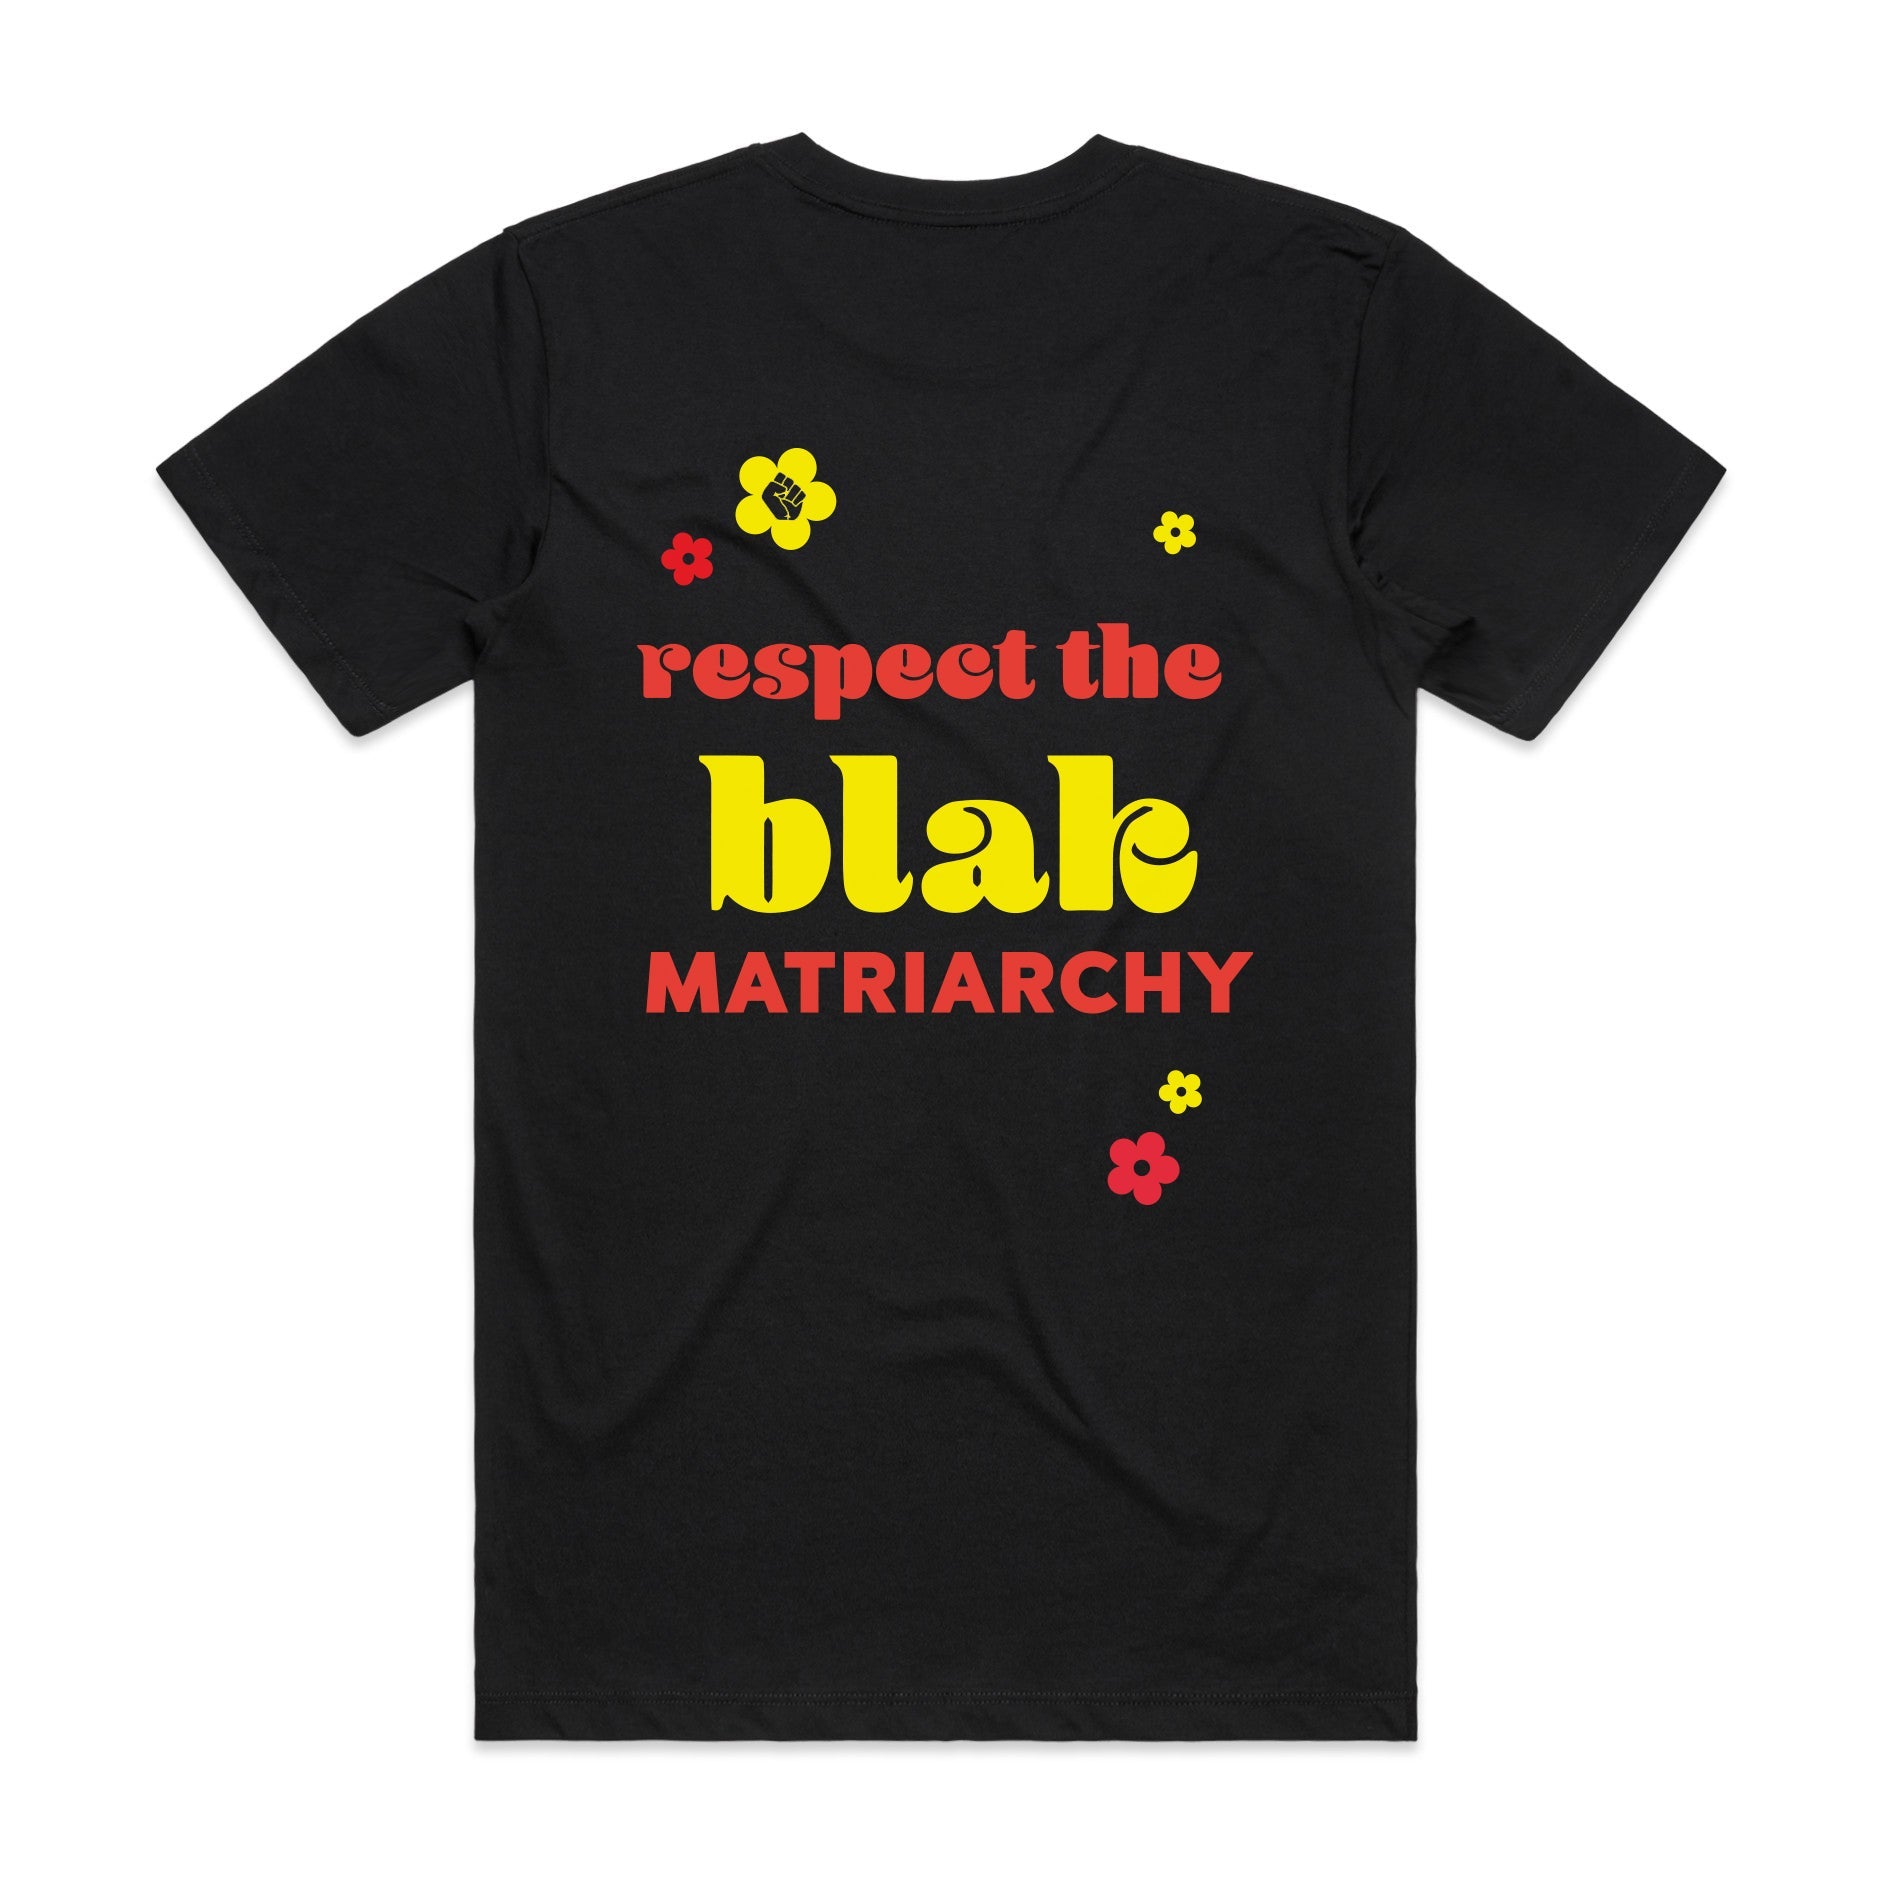 Respect the blak matriarchy political tee